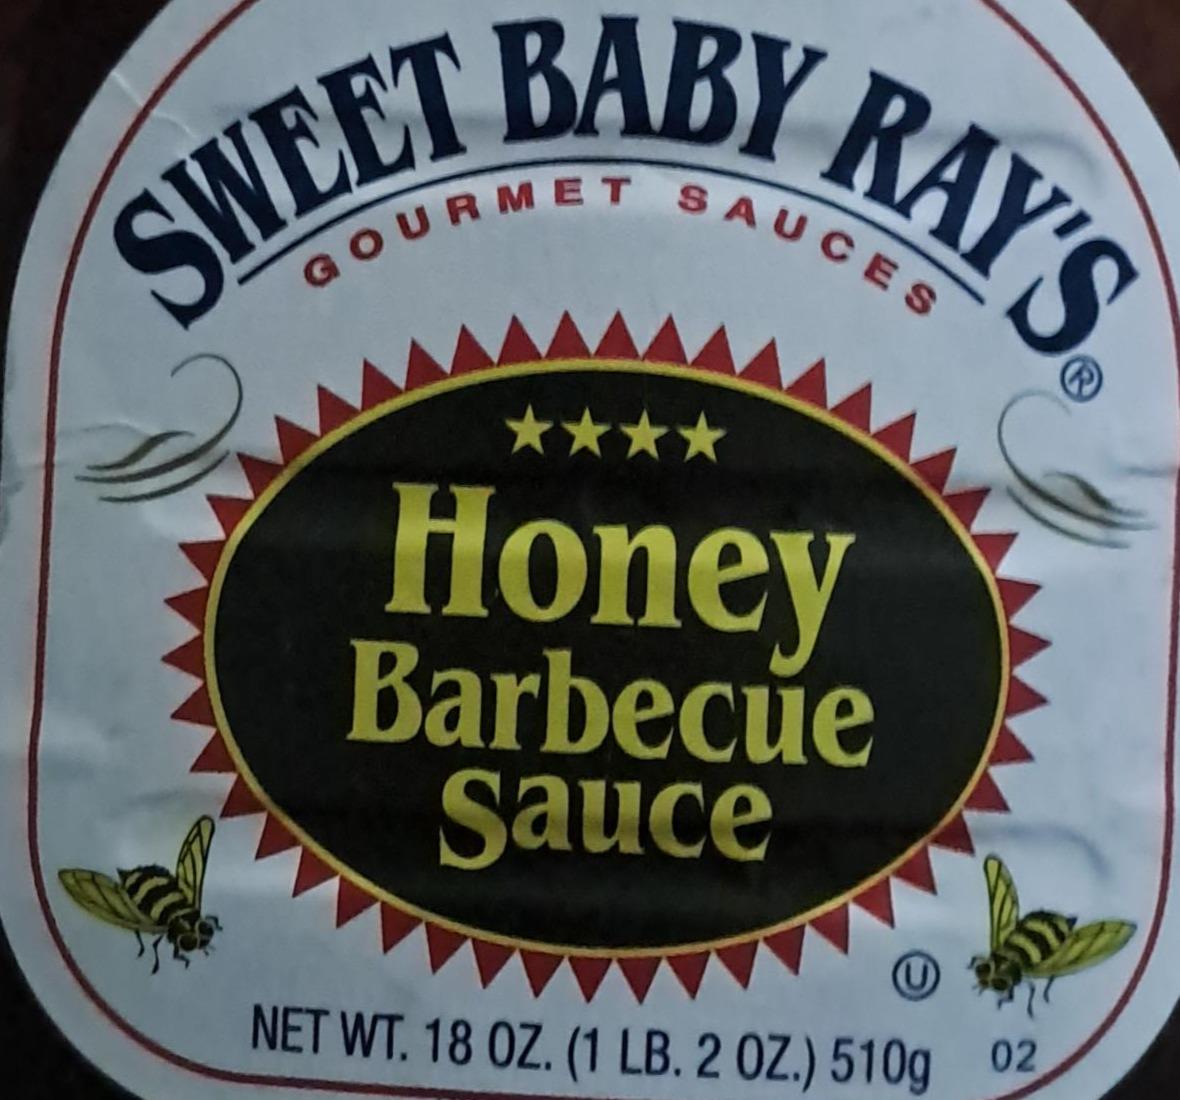 Фото - Honey Barbecue Sweet baby ray's